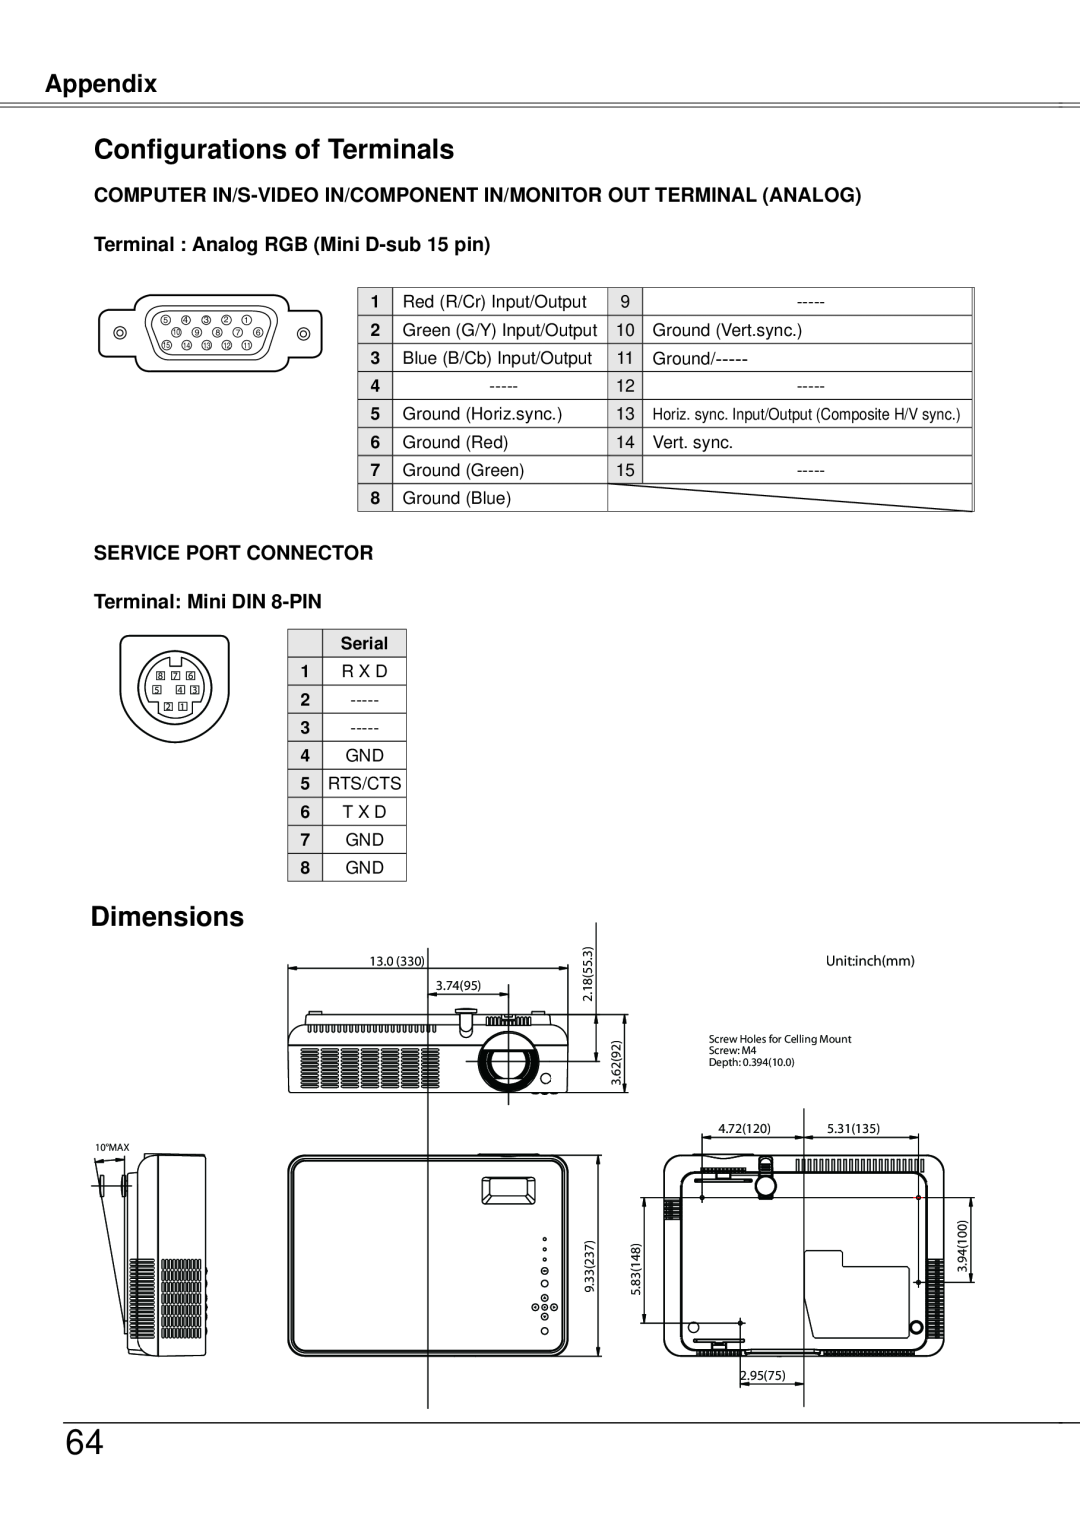 Eiki LC-XB21A Configurations of Terminals, Dimensions, Appendix, Terminal Analog RGB Mini D-sub 15 pin, Serial, R X D 